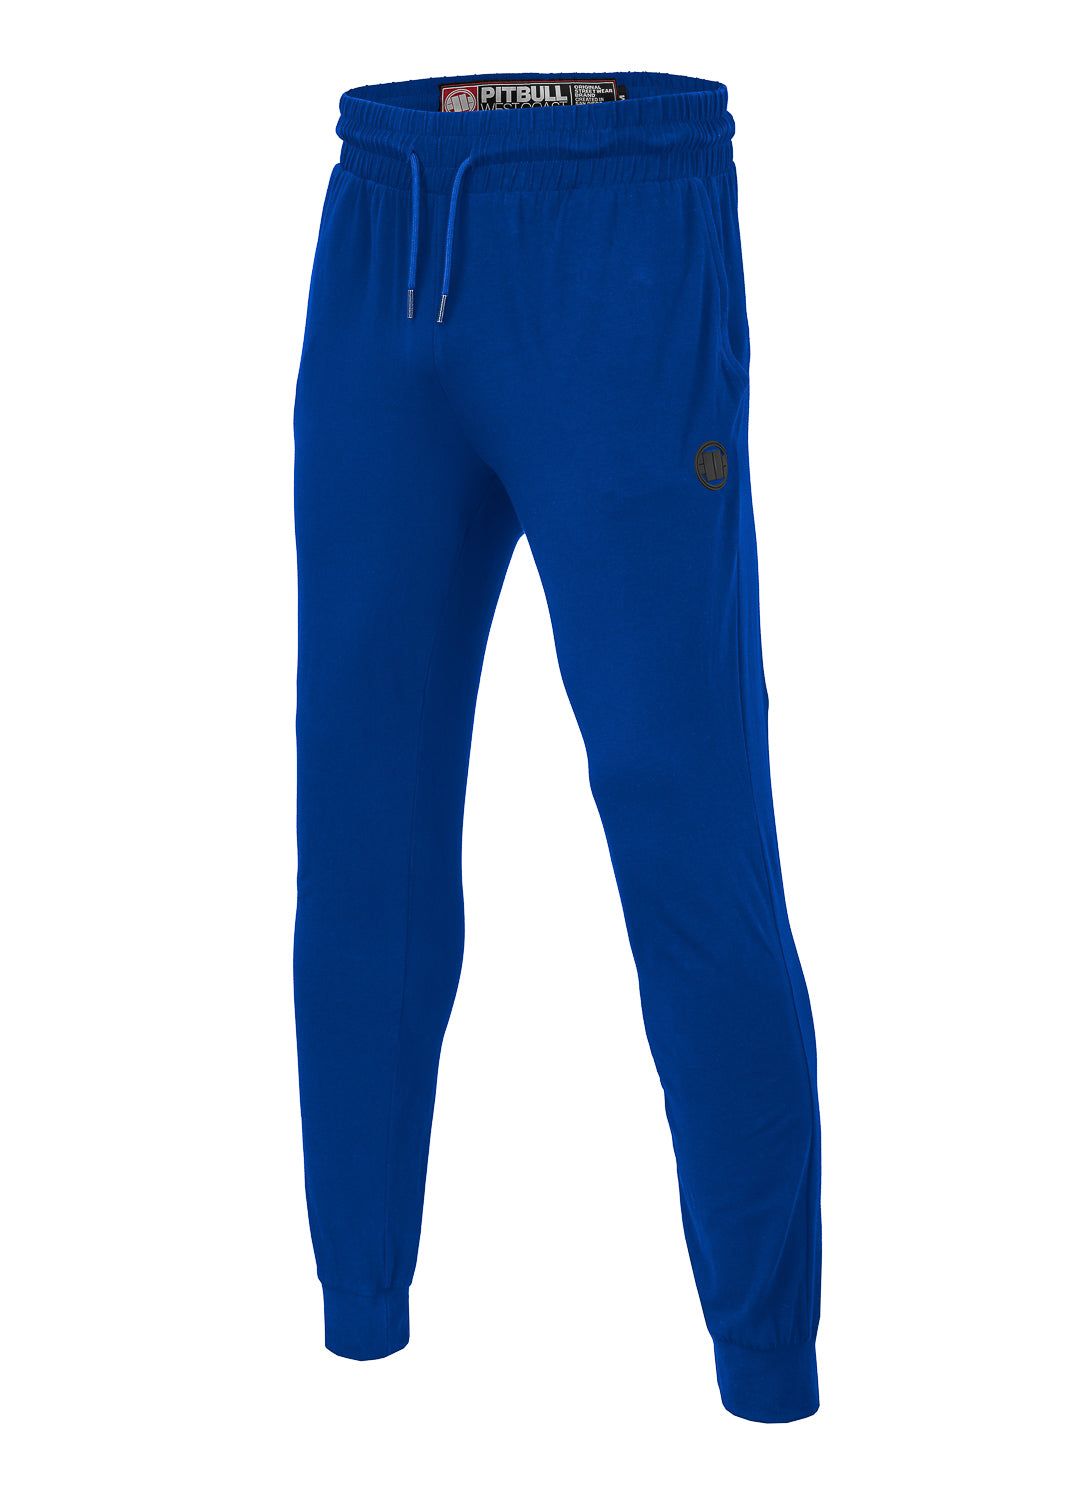 Jogging Pants DURANGO Spandex 210 GSM Royal Blue